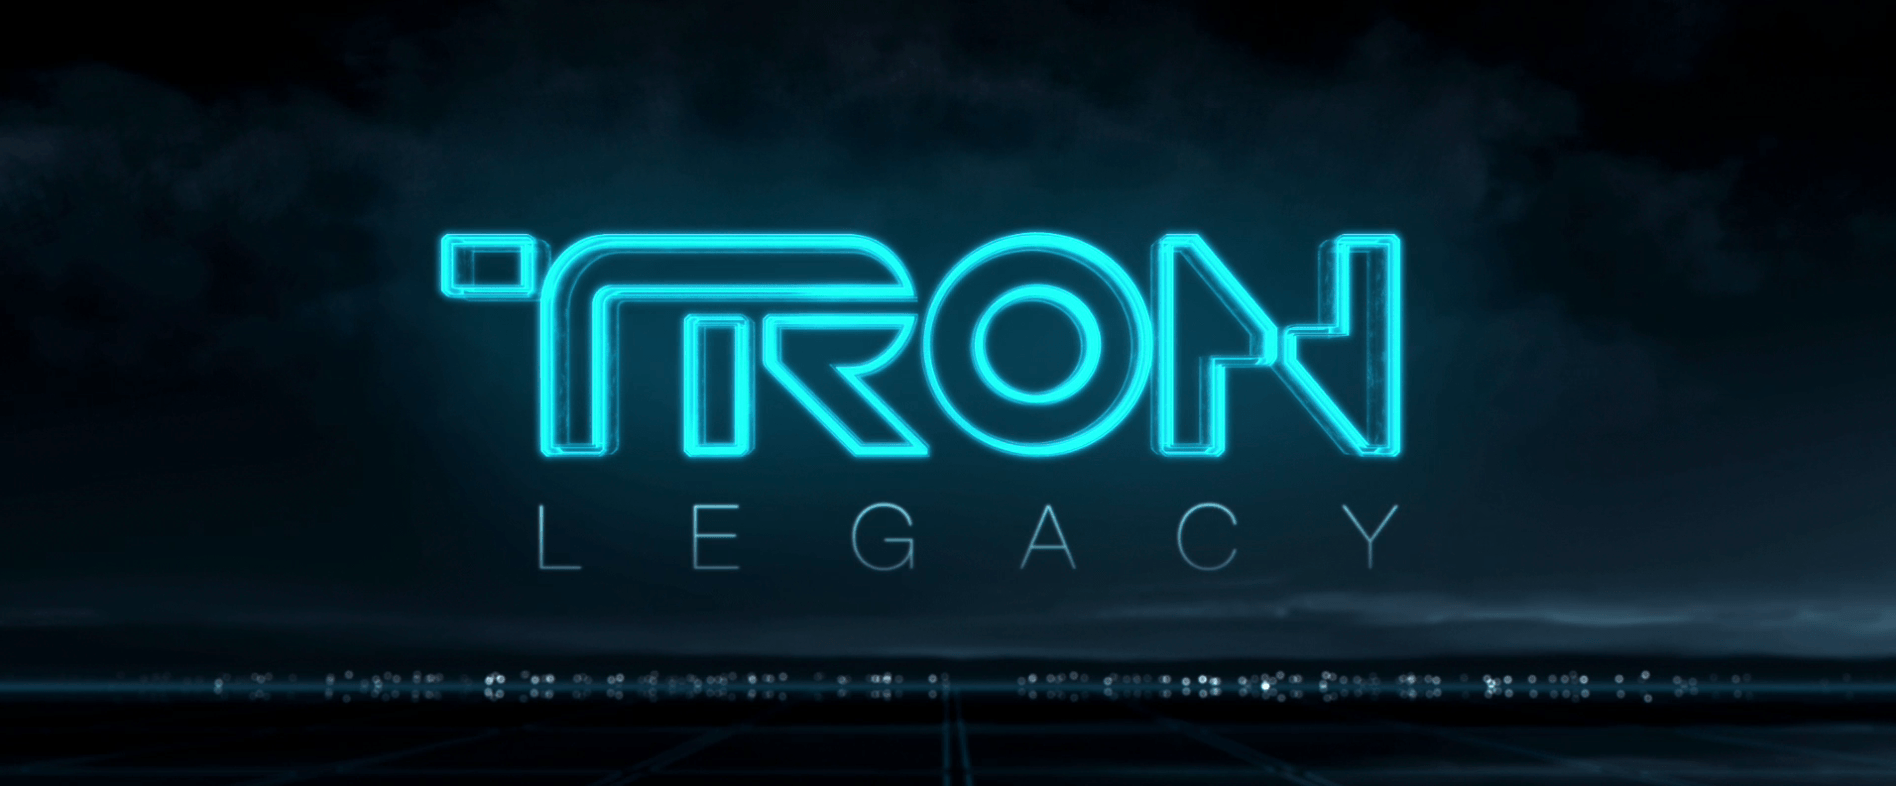 Tron Movie Logo - Tron Legacy Movie Logo Landscape Desktop Wallpaper